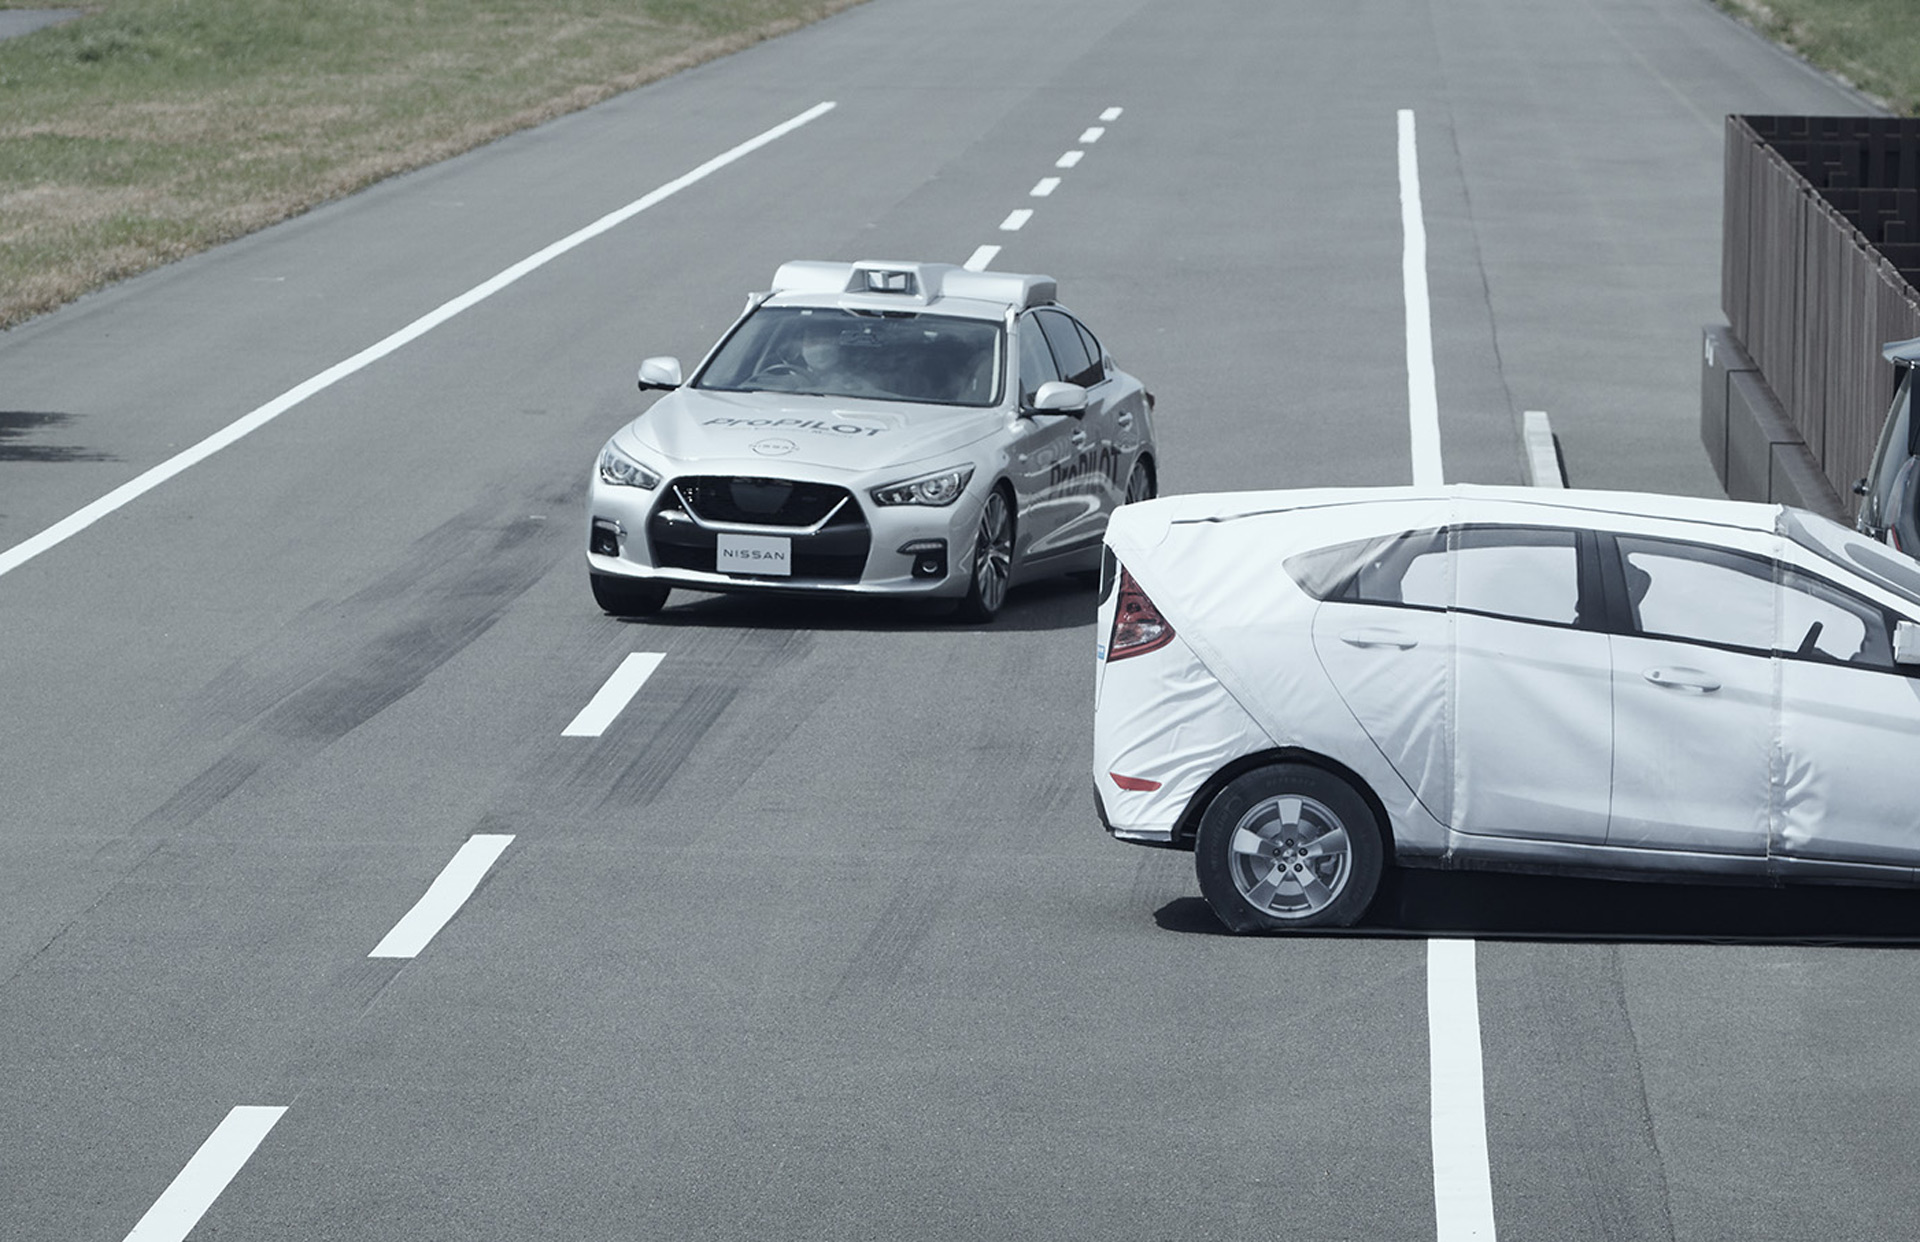 Nissan demonstrates next generation collision avoidance tech